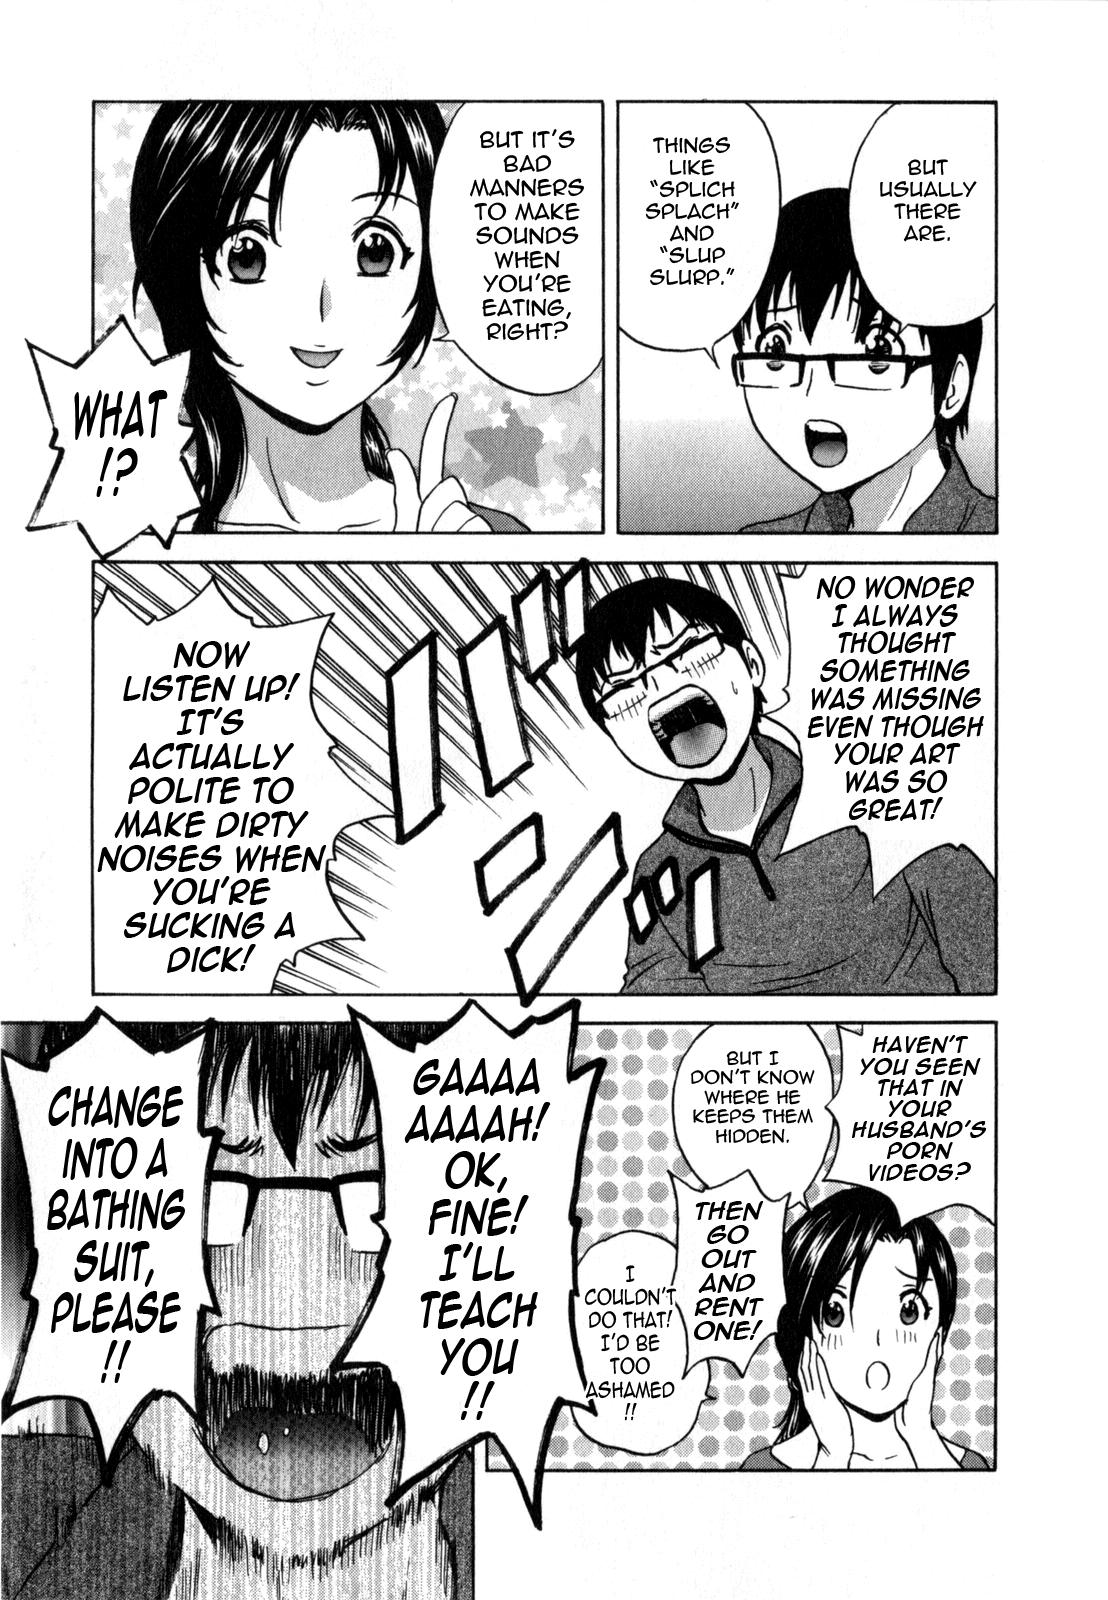 [Hidemaru] Life with Married Women Just Like a Manga 1 - Ch. 1-5 [English] {Tadanohito} 15